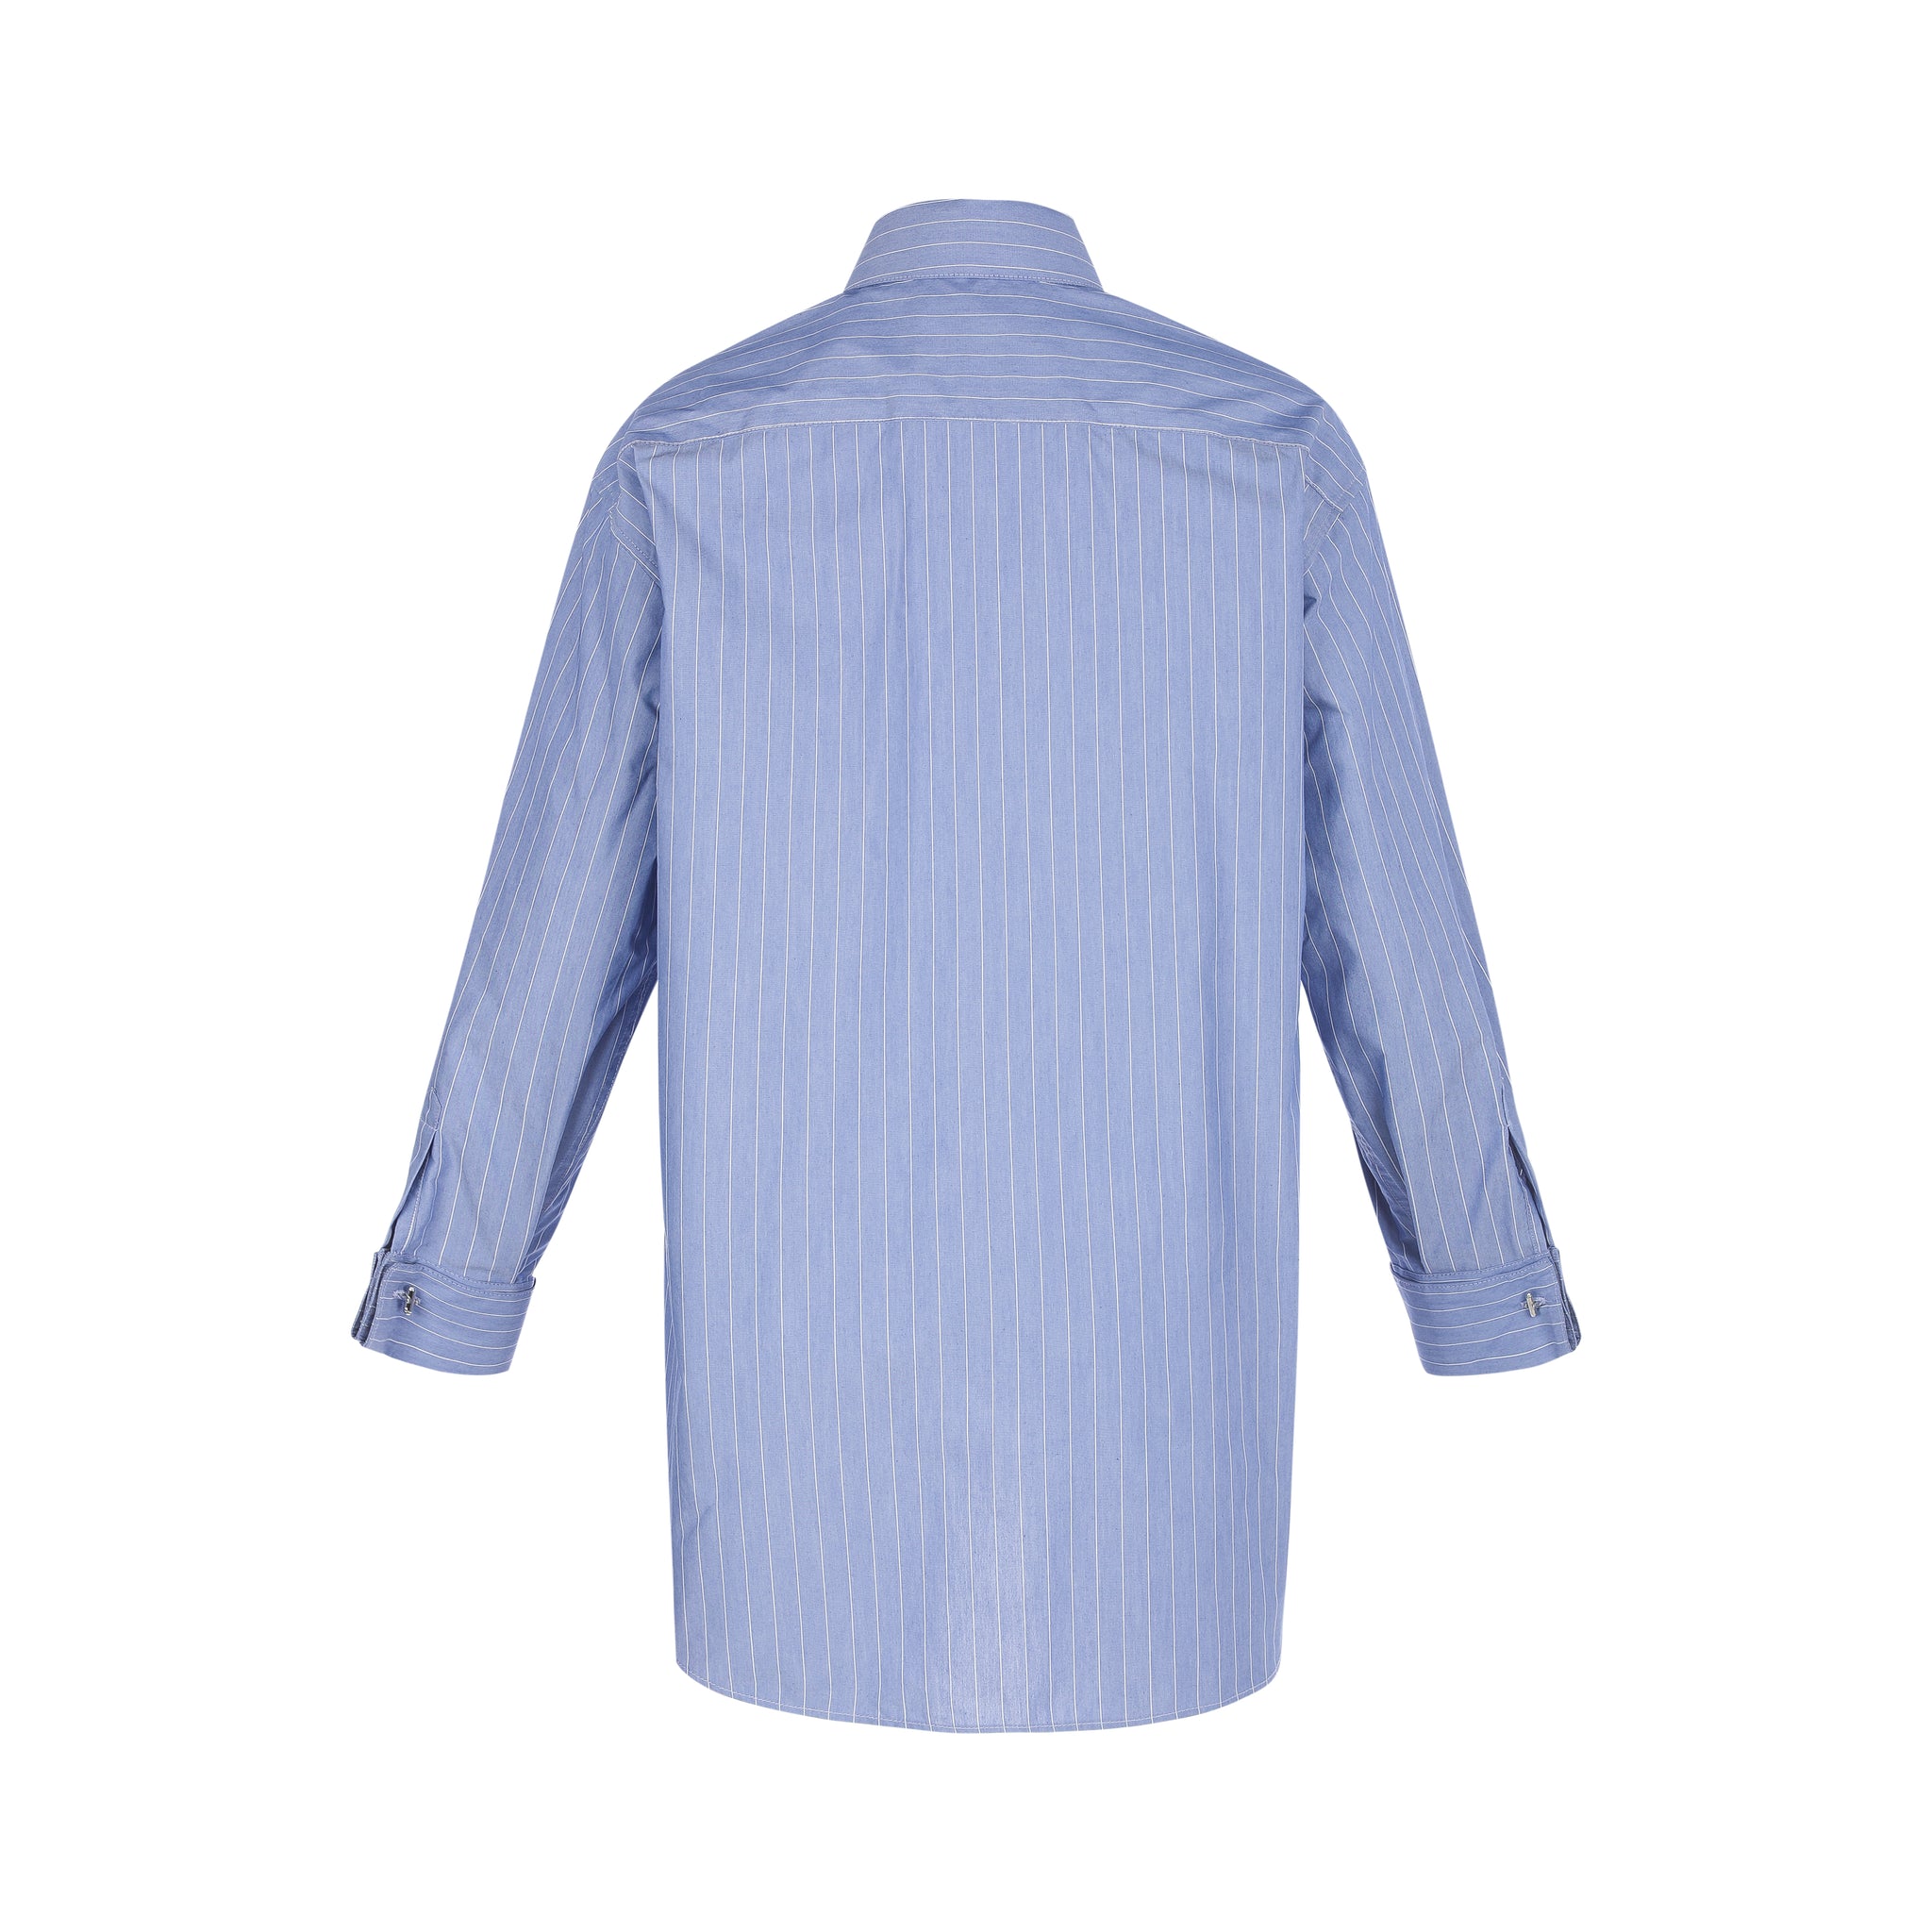 Valla Shirt - Light Blue Pinstripe